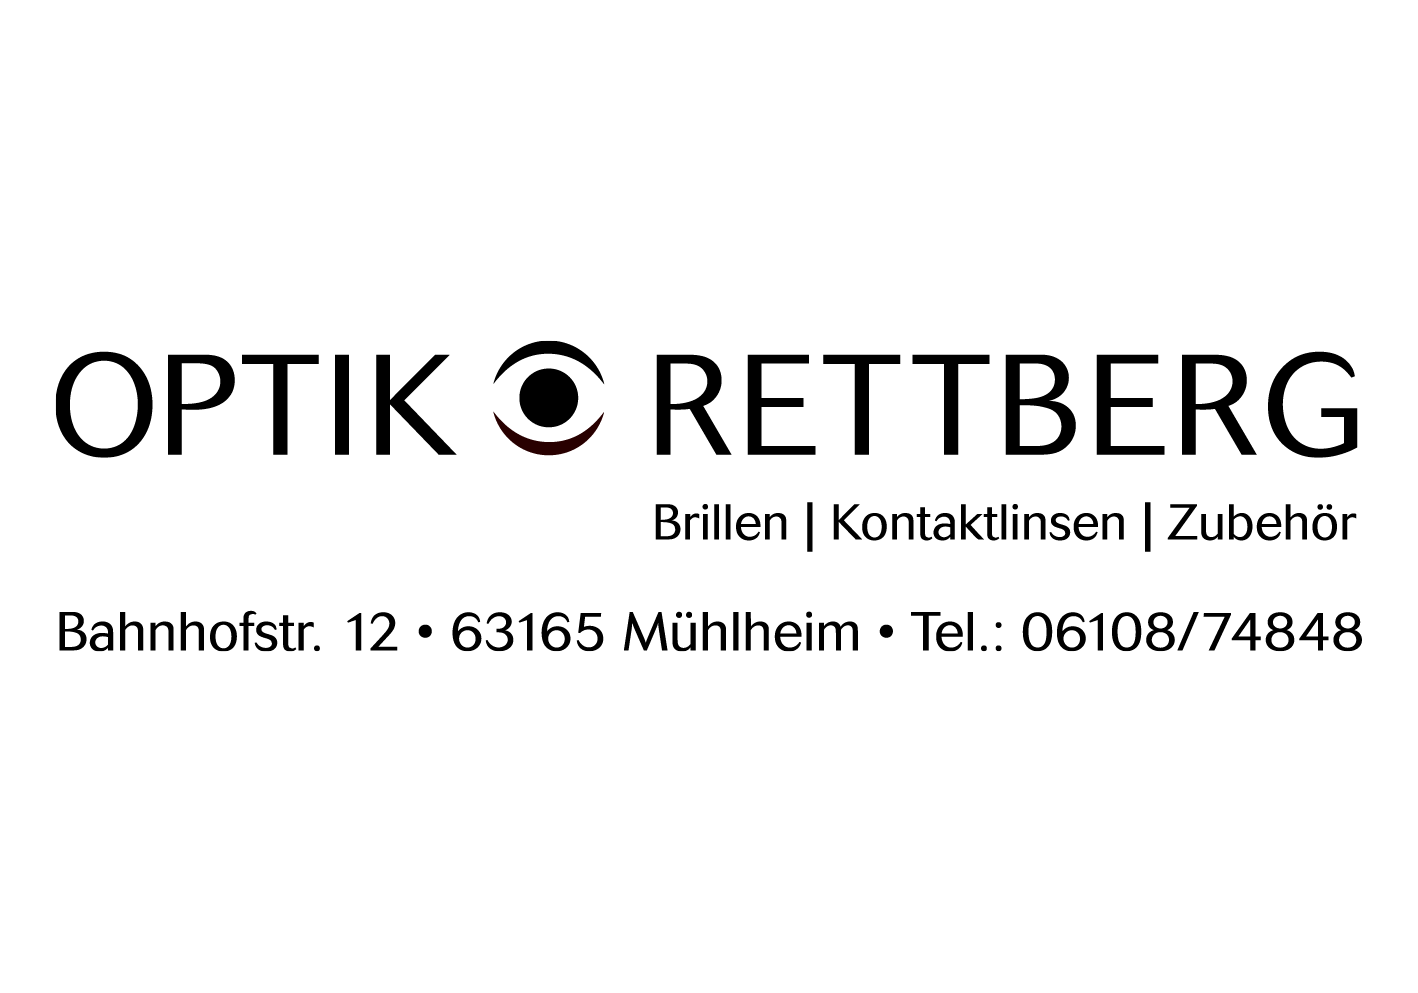 Optik Rettberg